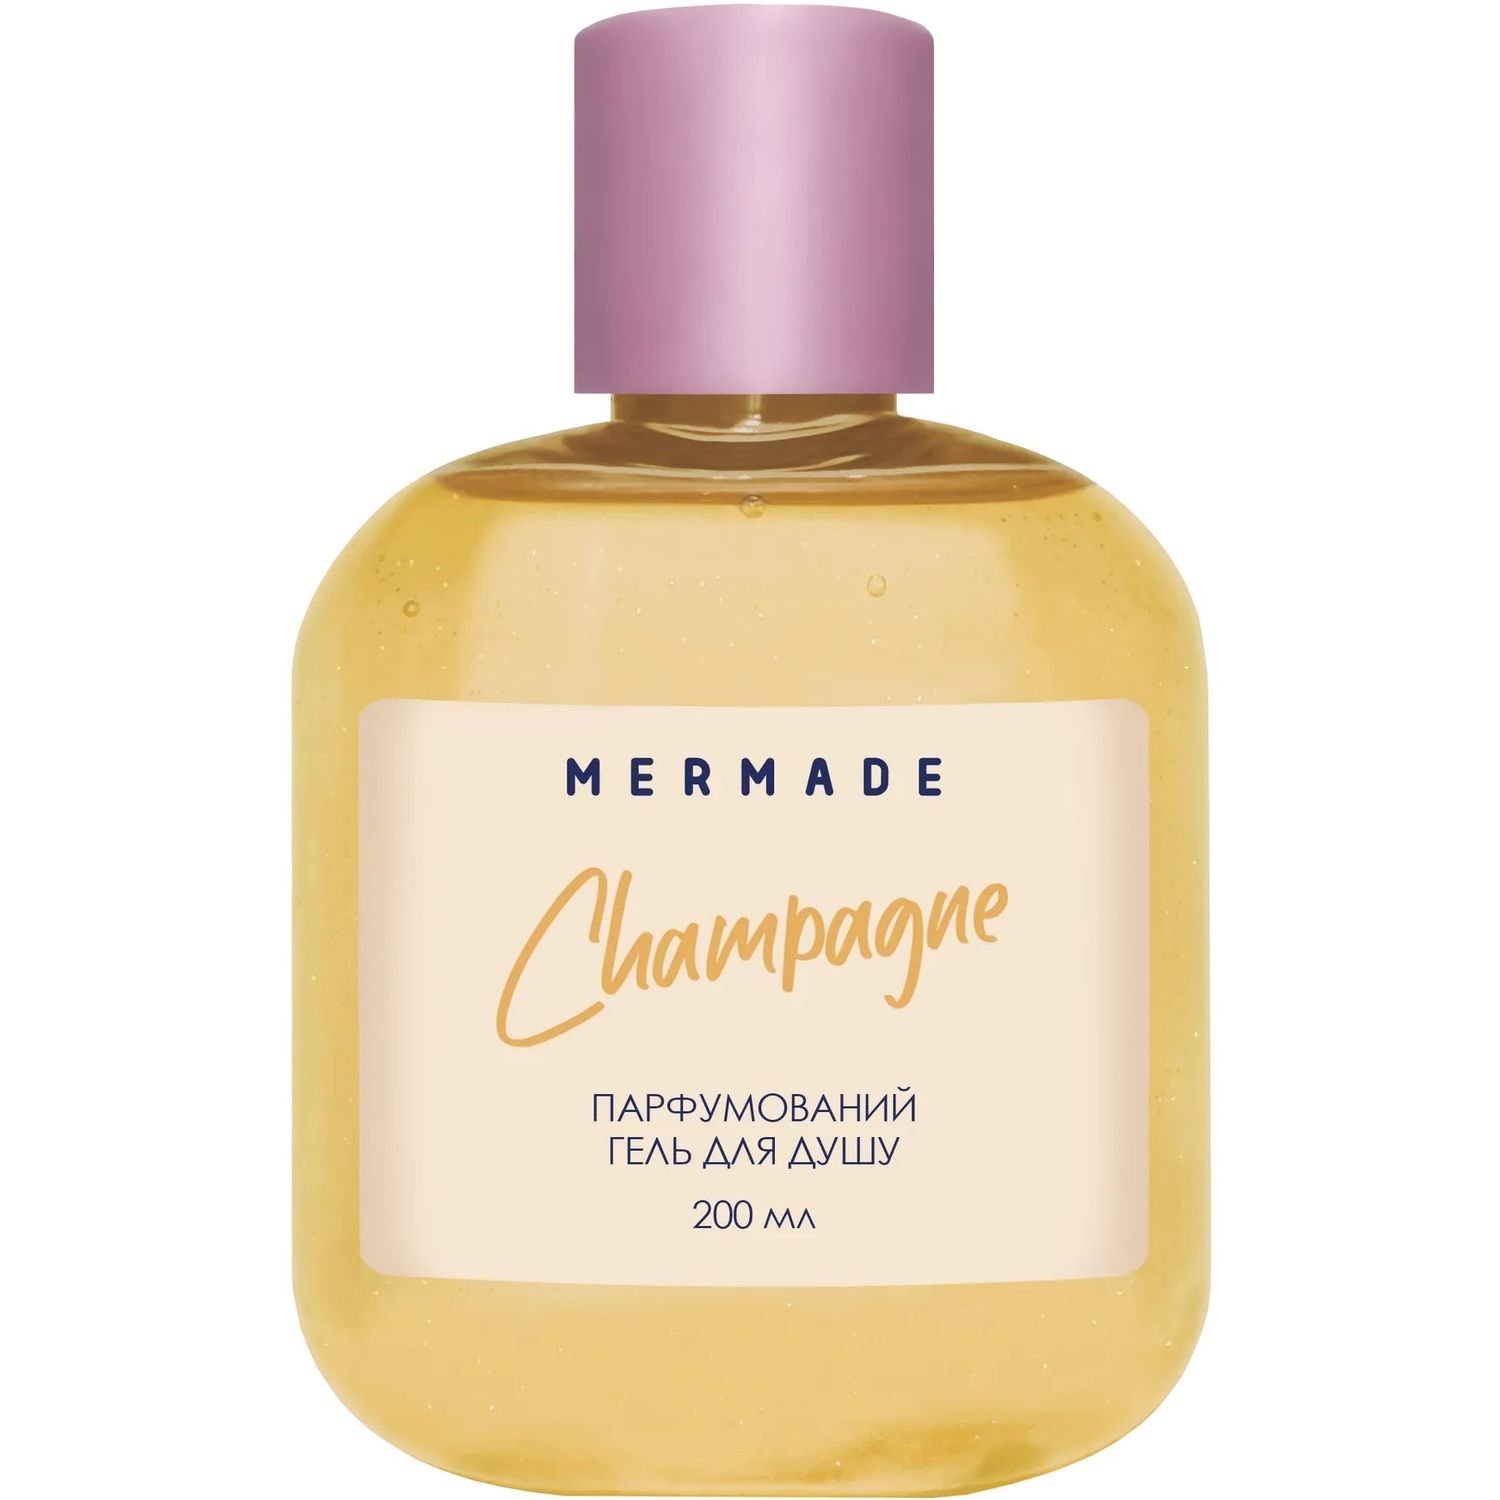 Парфюмерный гель для душа Mermade Champagne, 200 мл - фото 1